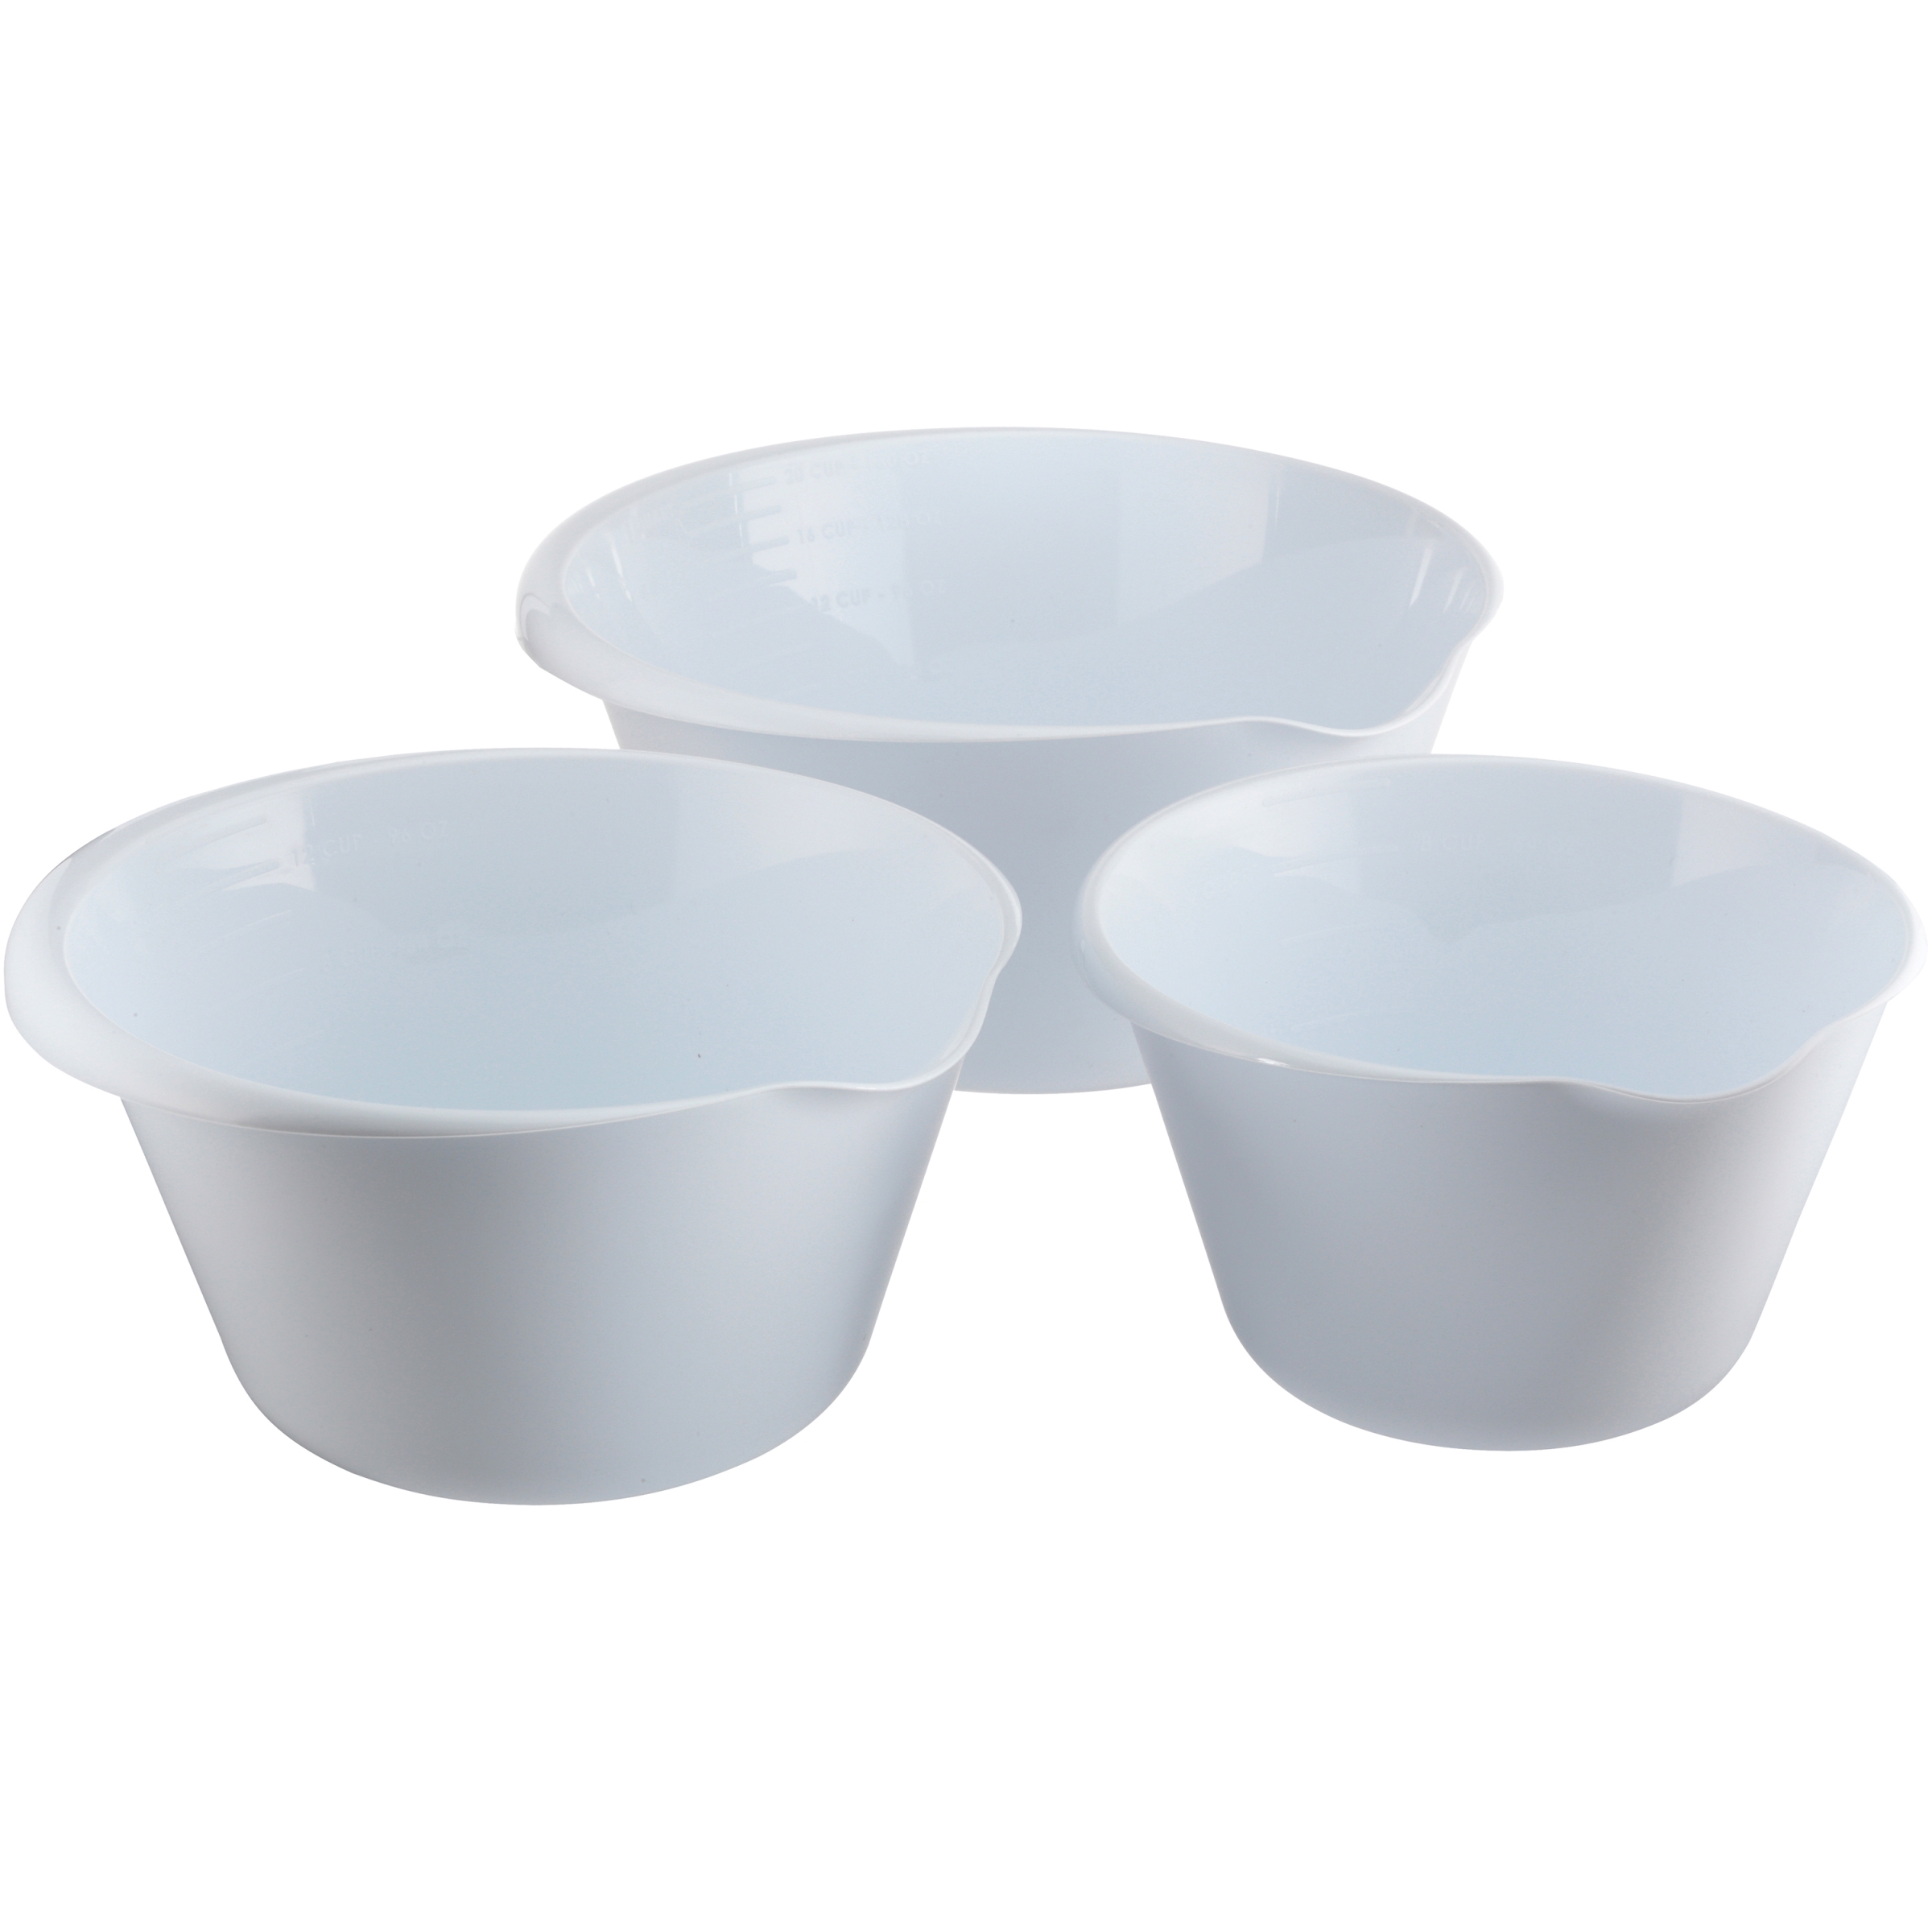 Mainstays Mixing Bowl Set, 3 Piece, Assorted Sizes, White, Polypropylene - image 4 of 4